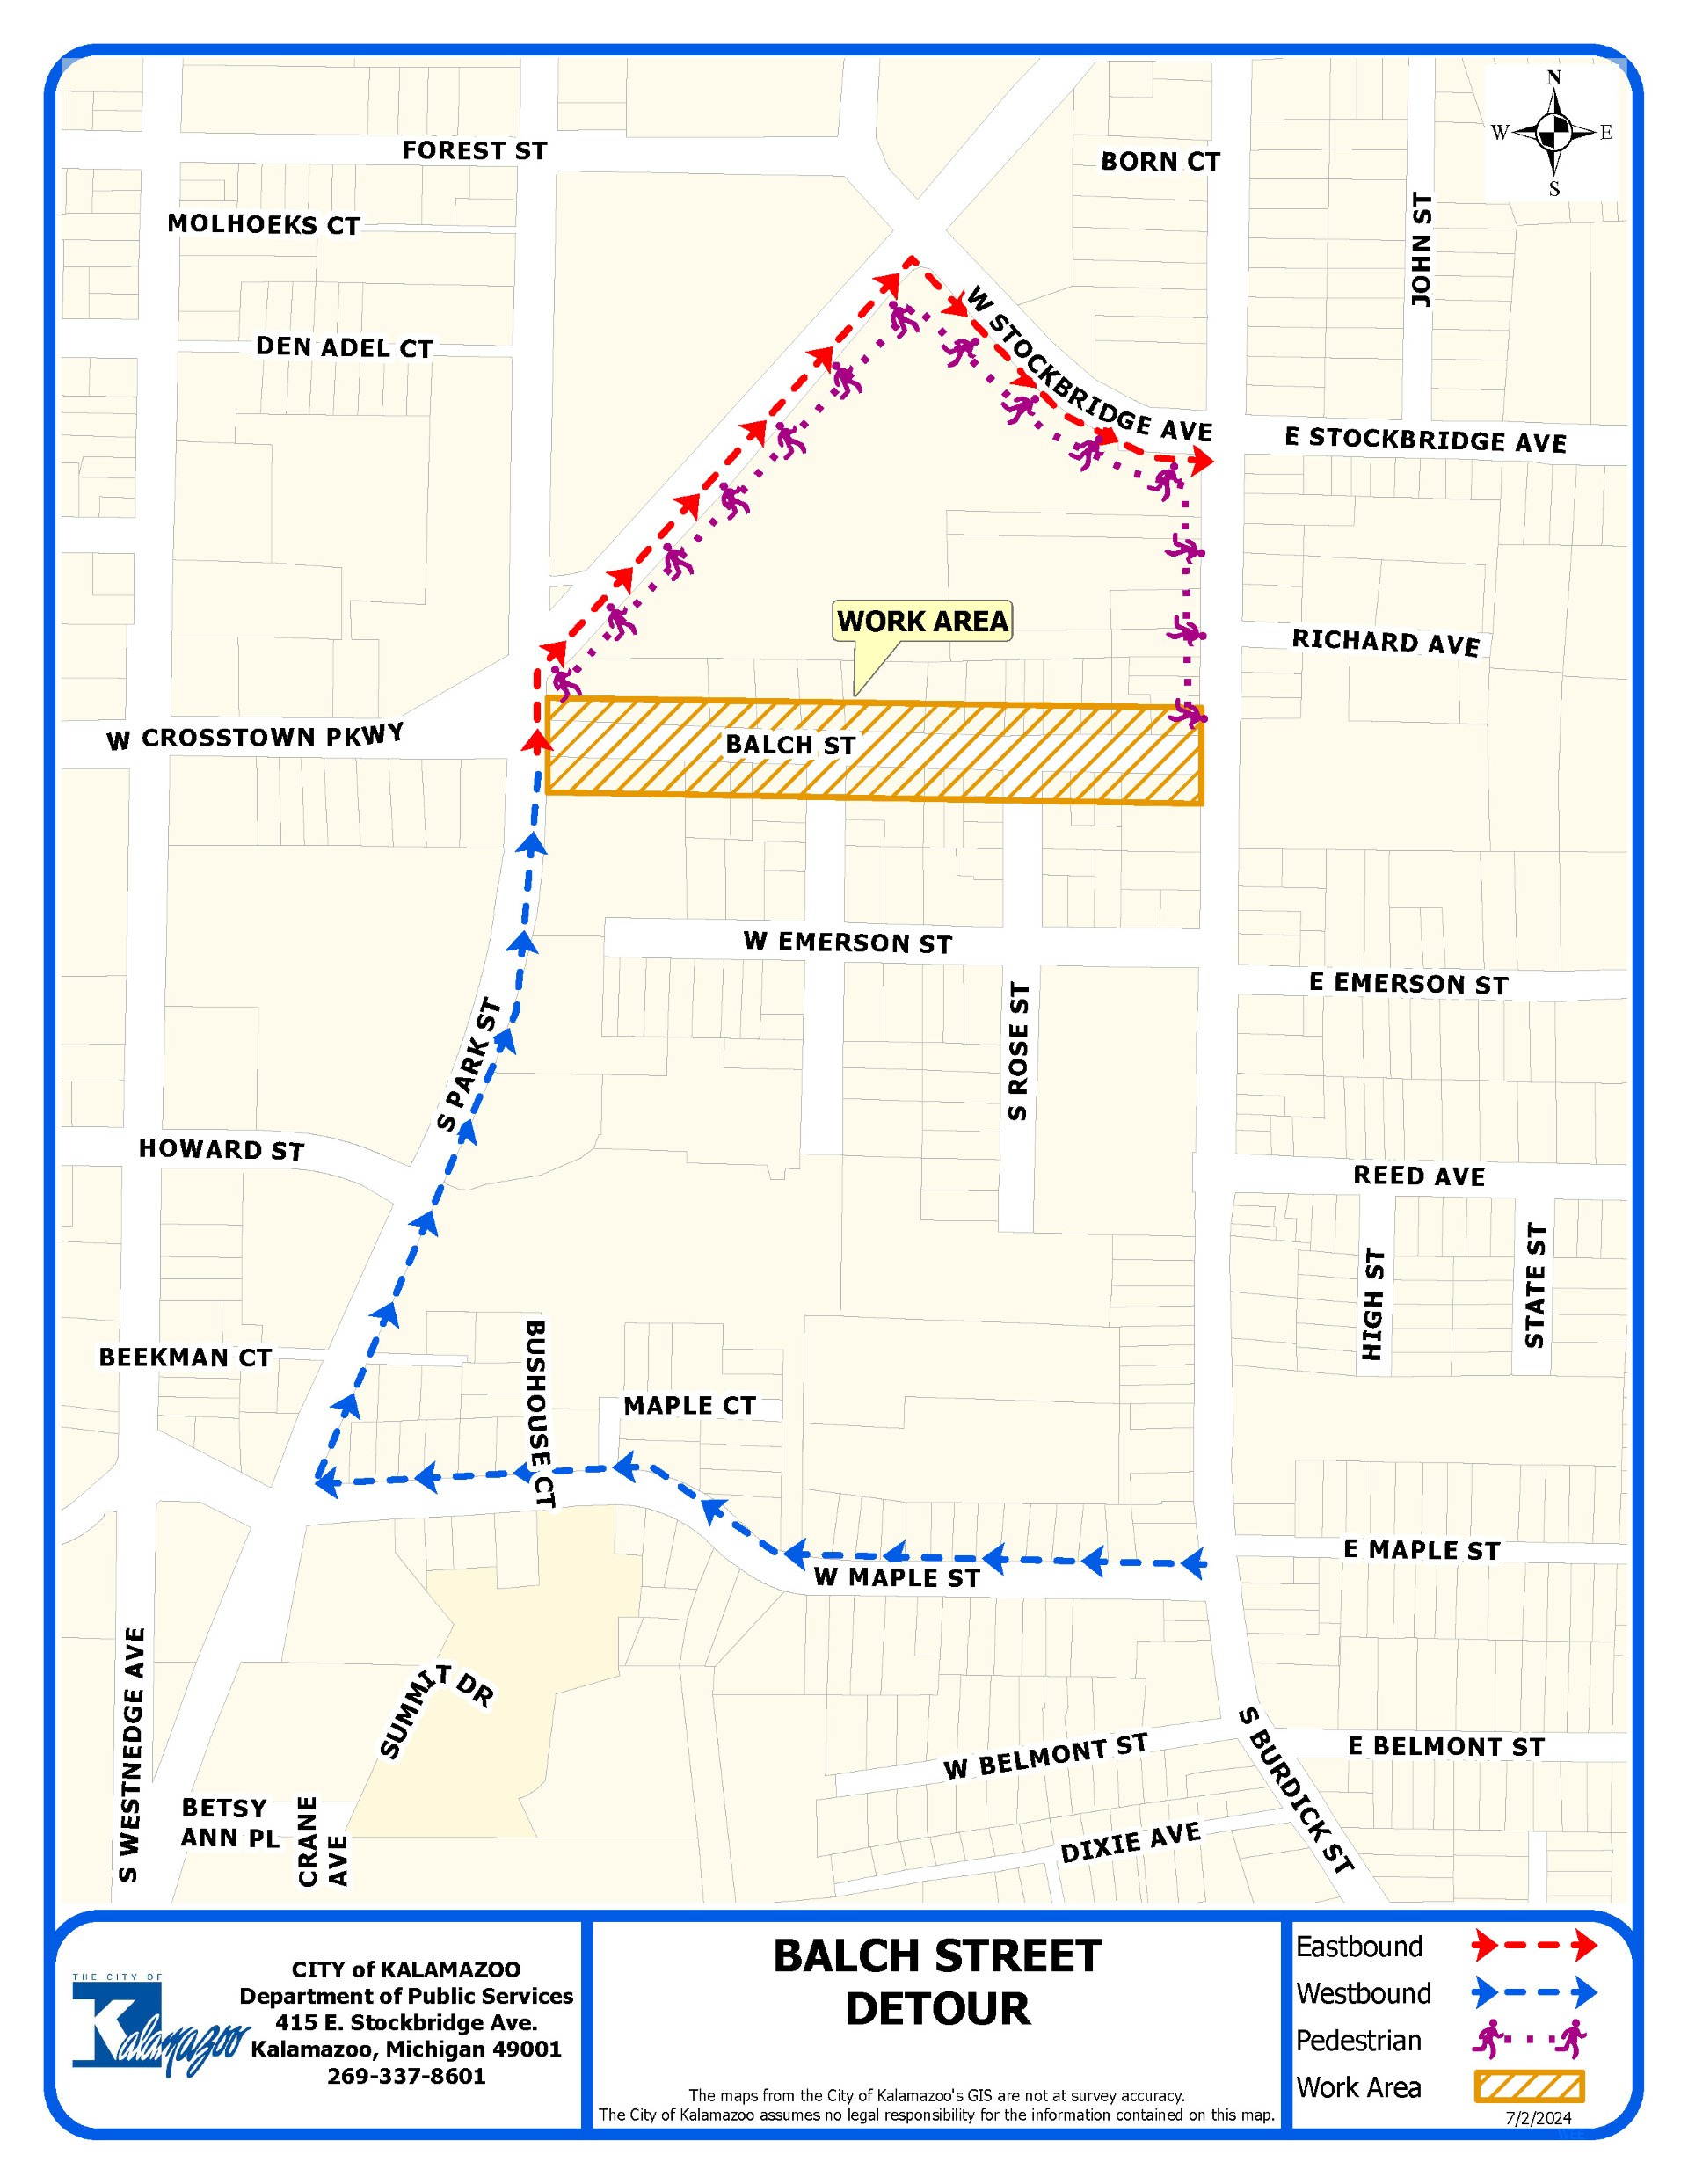 Balch Street Project Detour Map